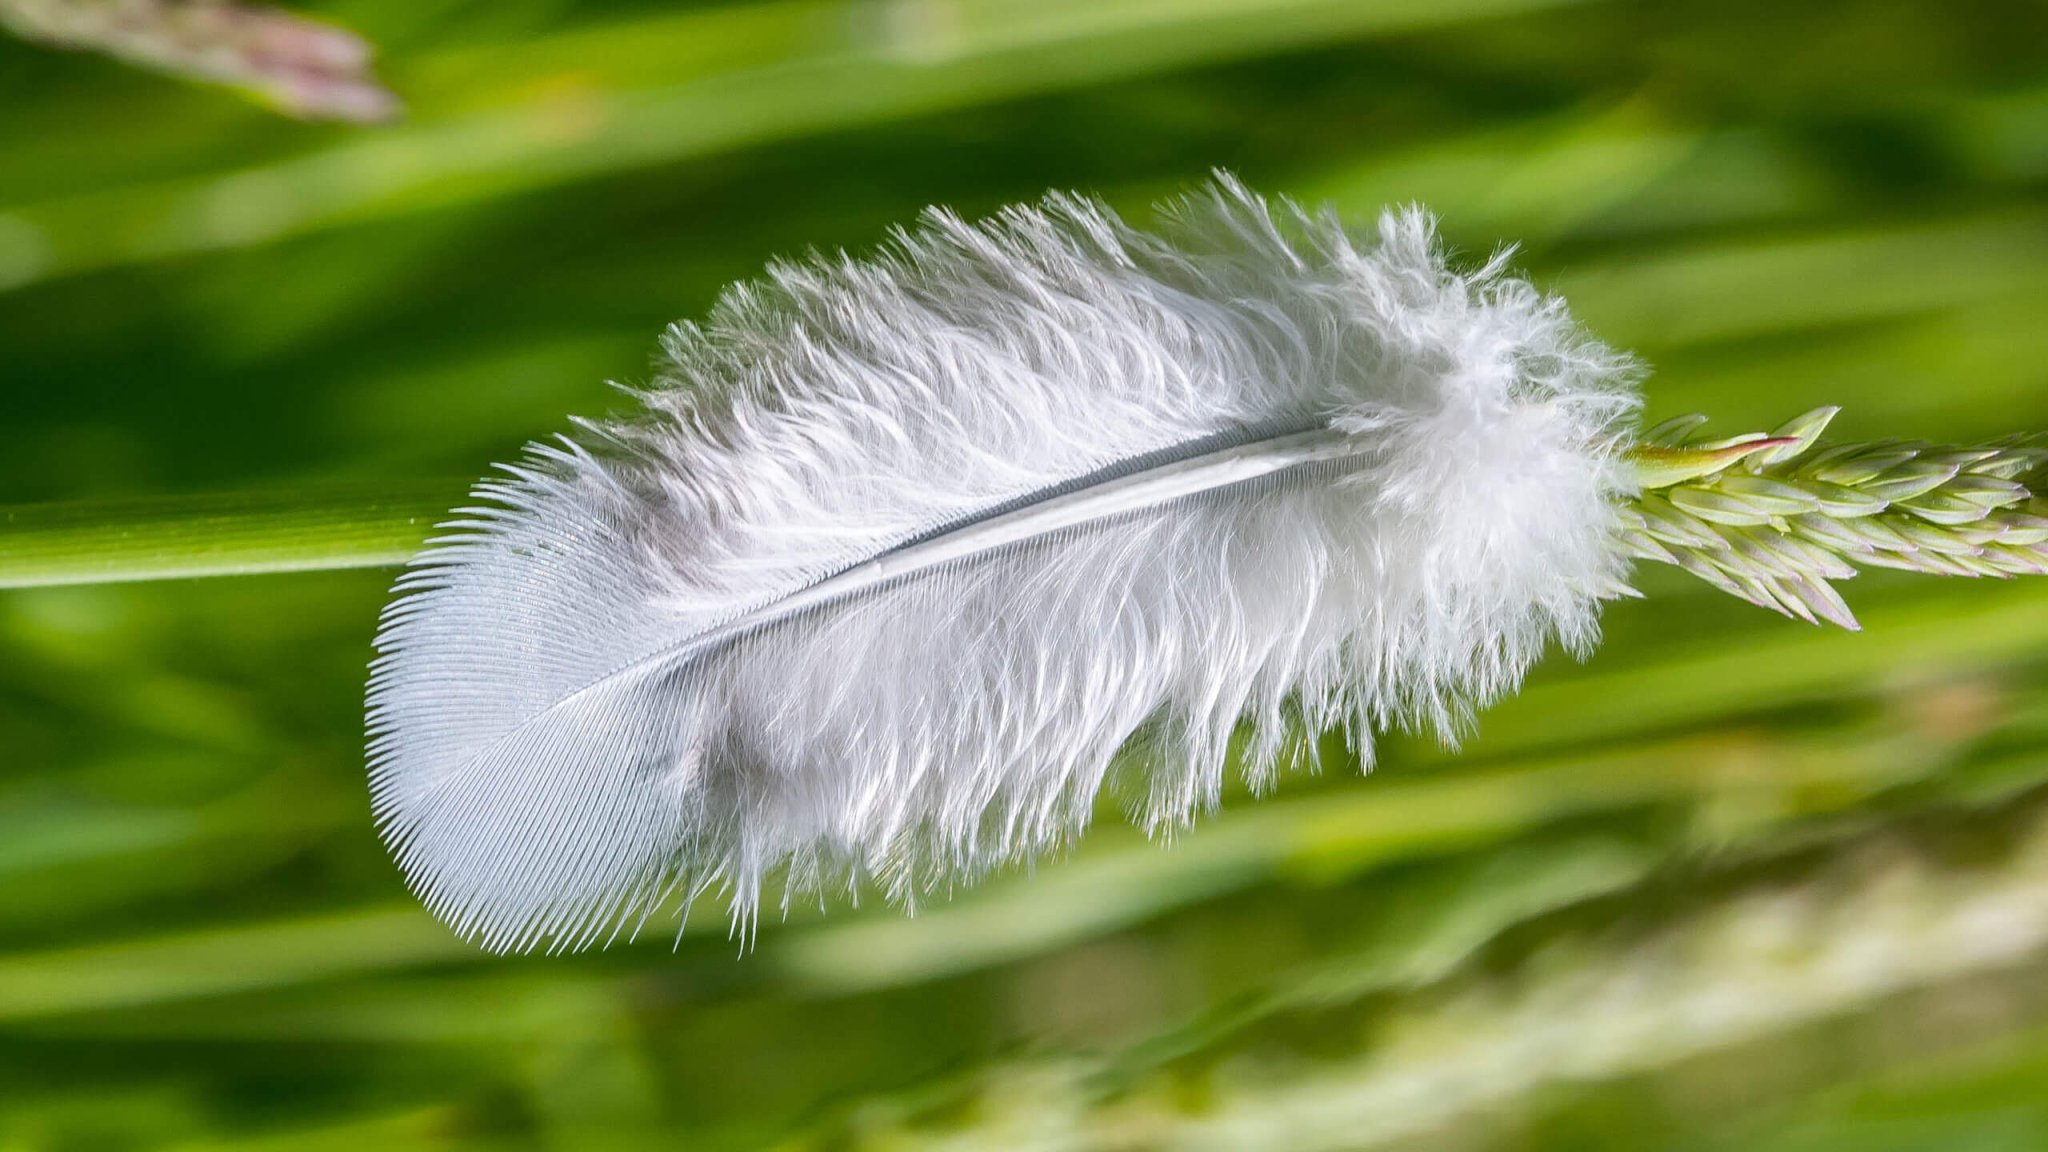 Shutter Notes: Steve Thackeray — Downy Feather